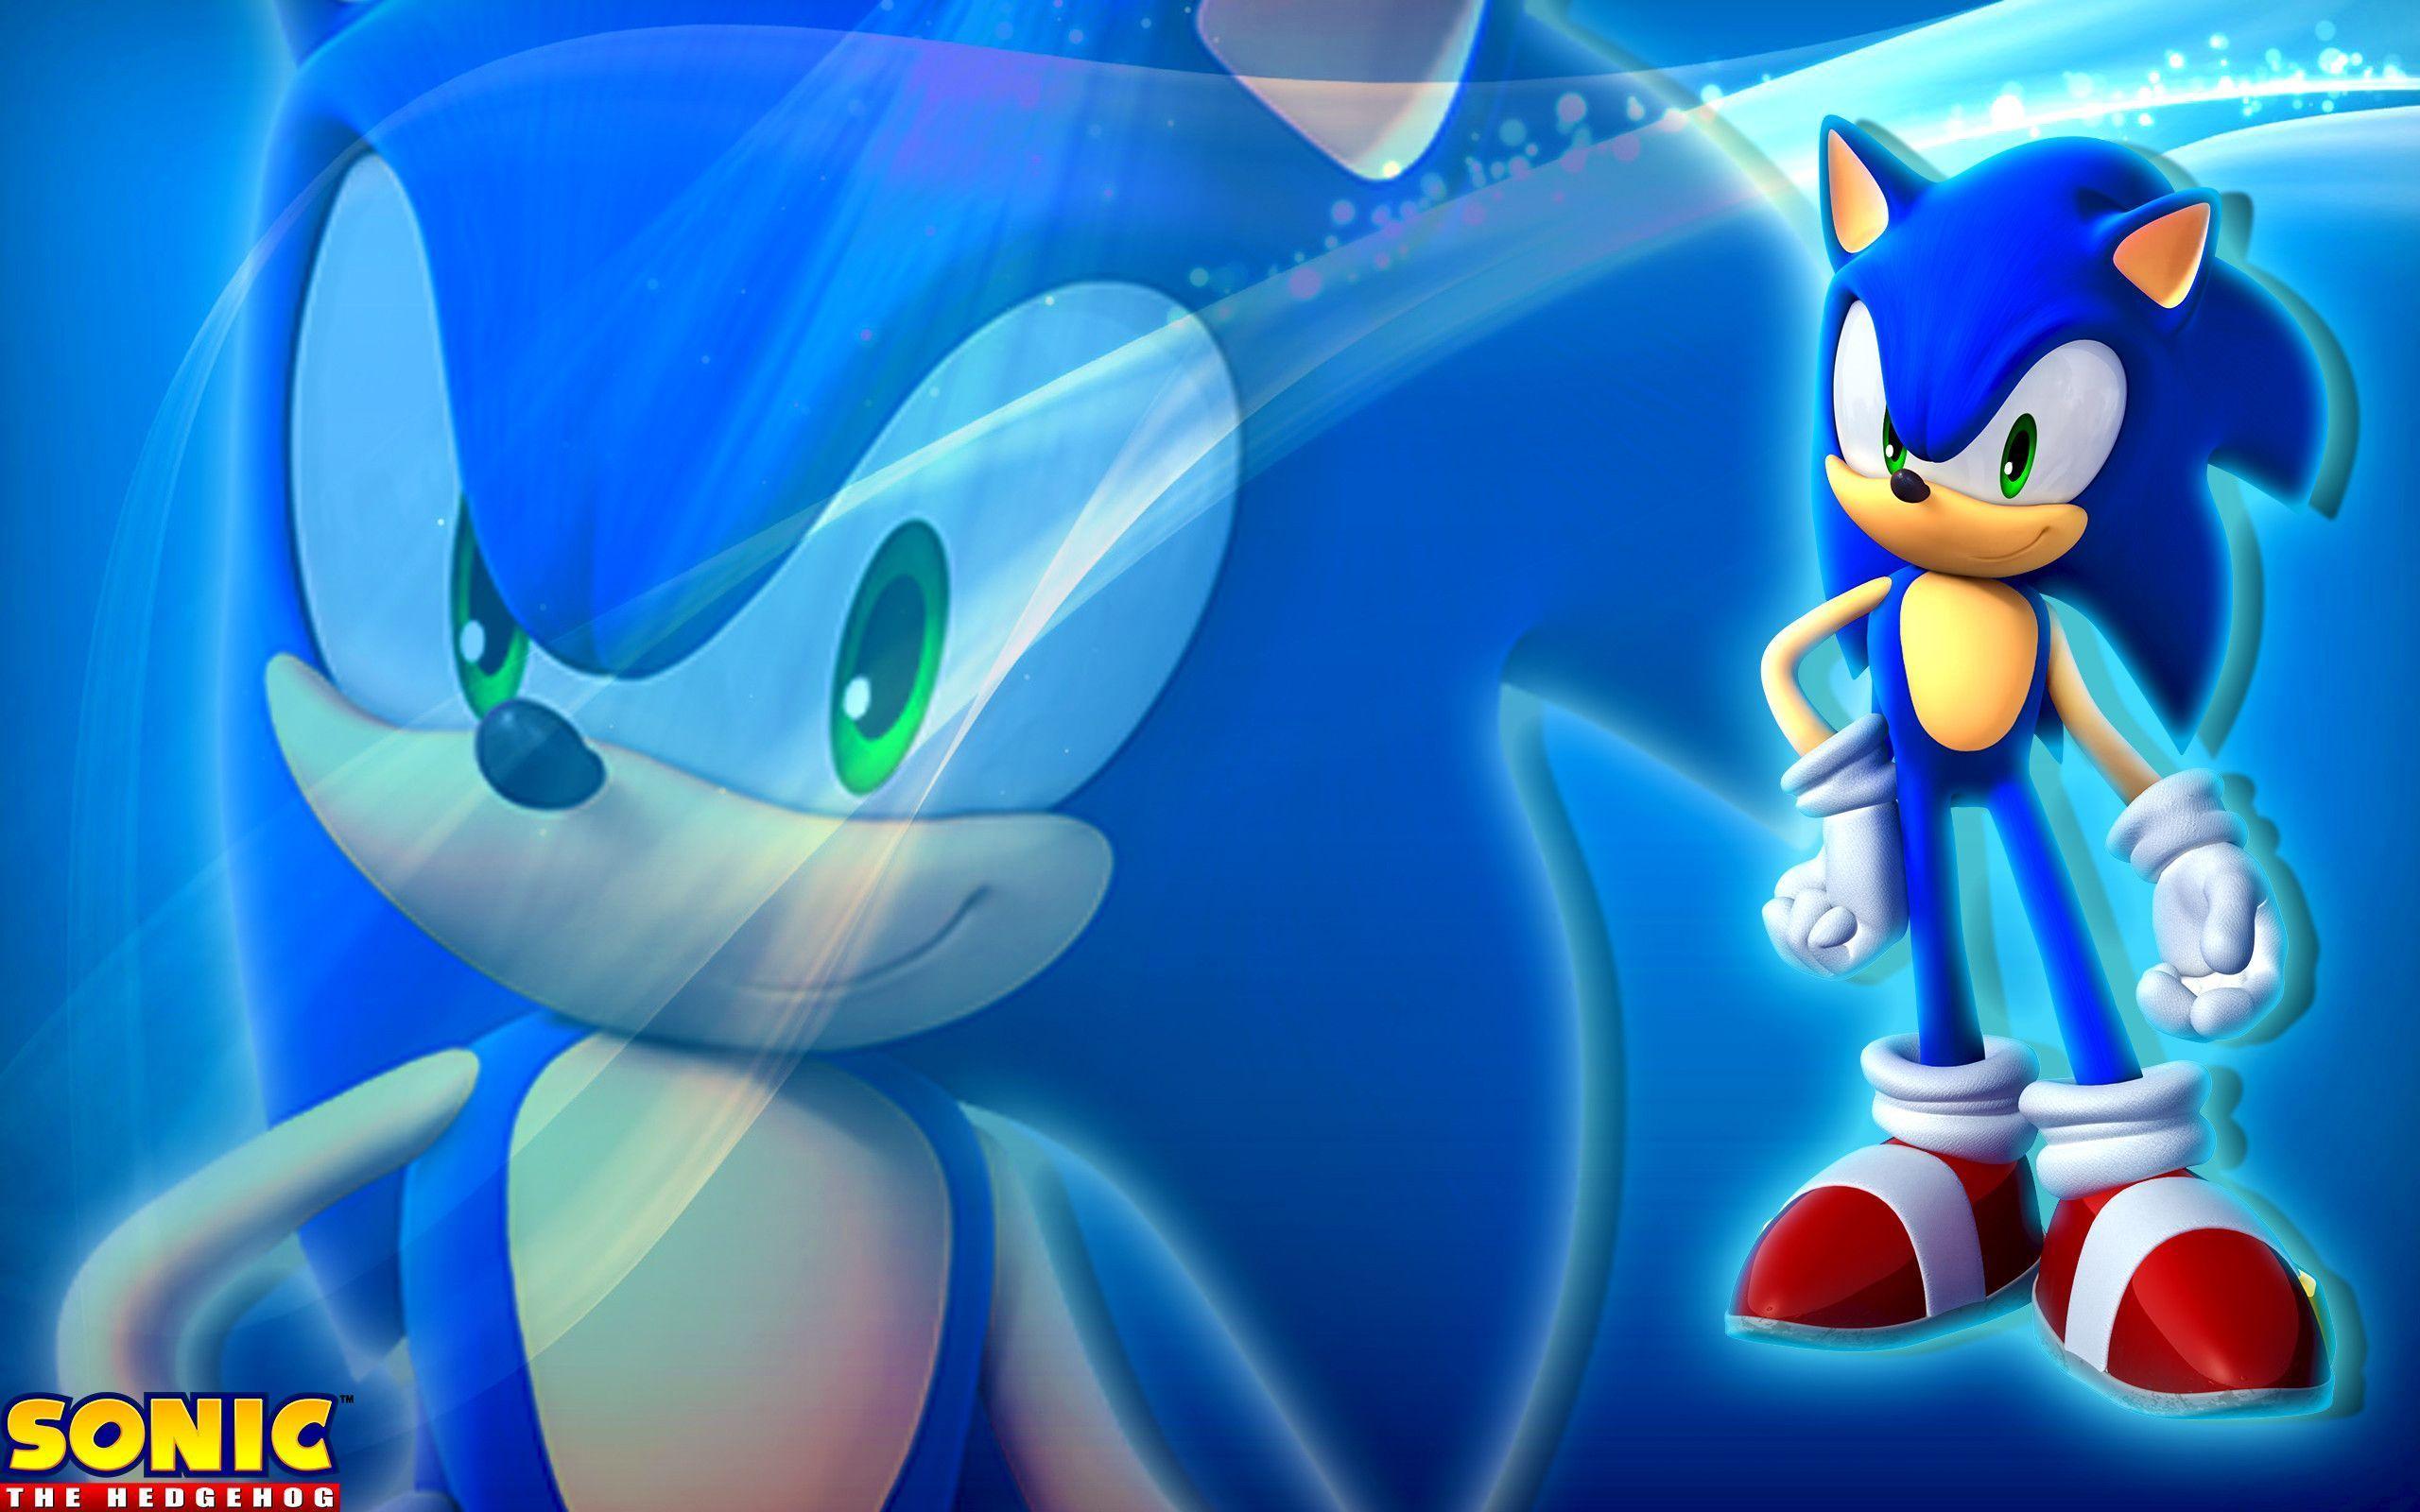 Sonic The Hedgehog Wallpaper. HD Background Wallpaper. Heroes